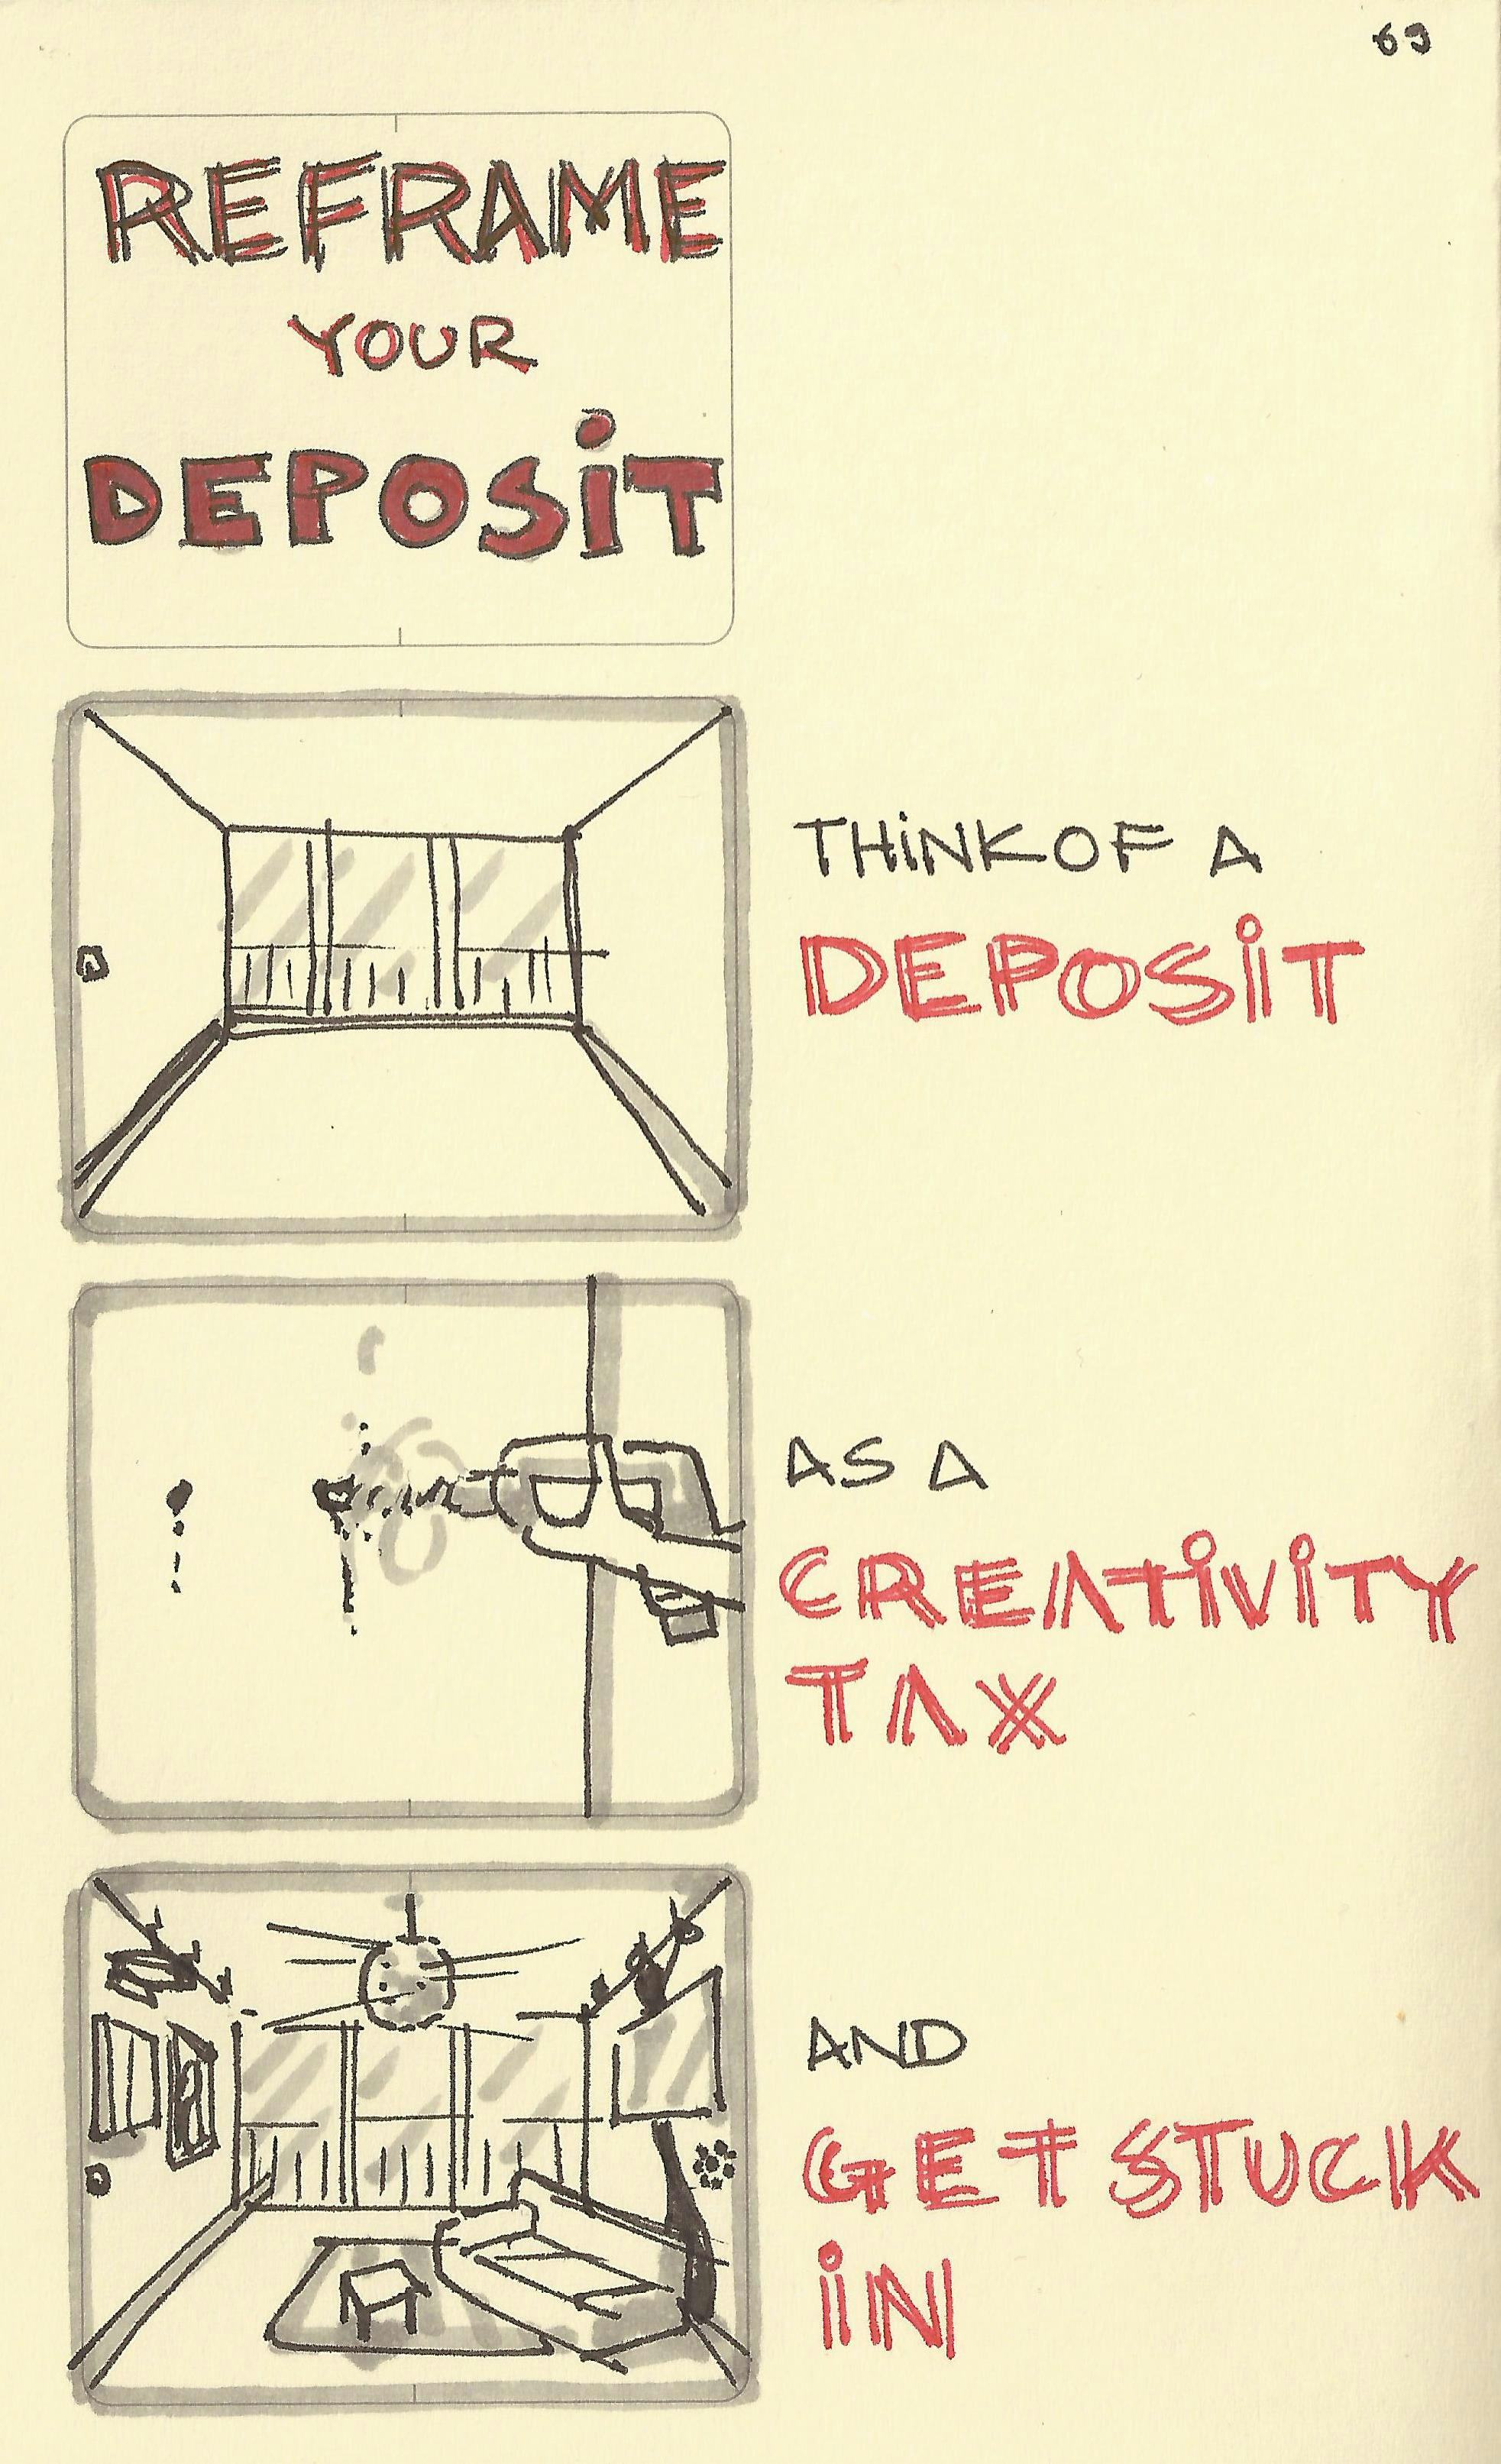 Reframe your deposit - Sketchplanations